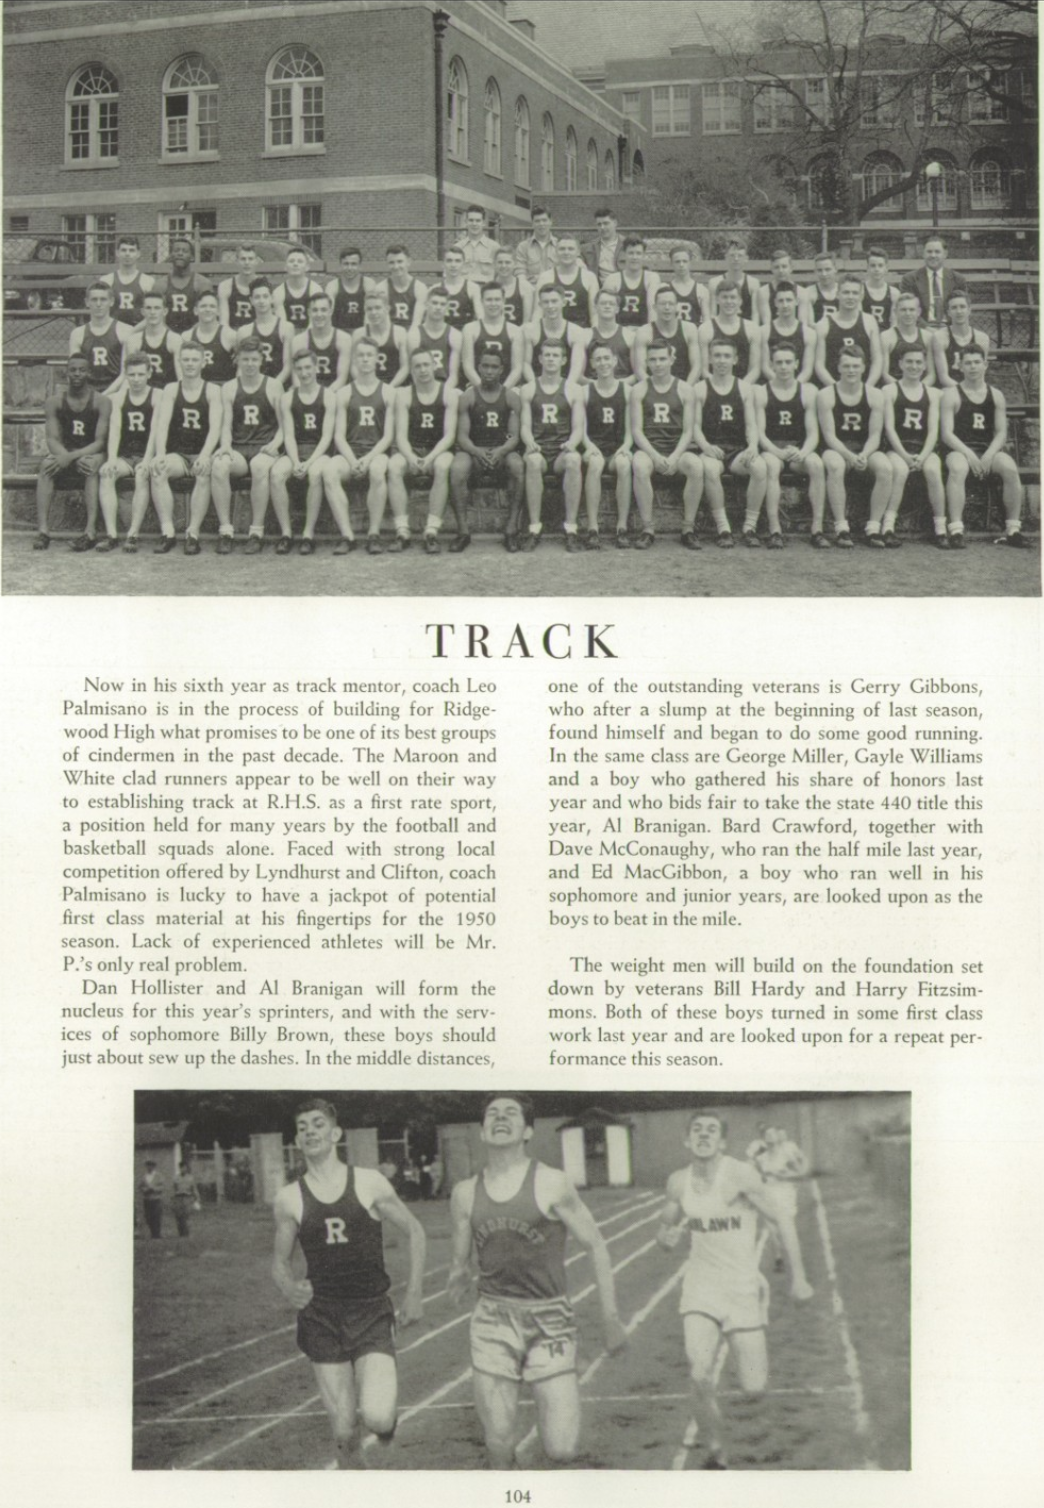 1950 Boys’ Track Team